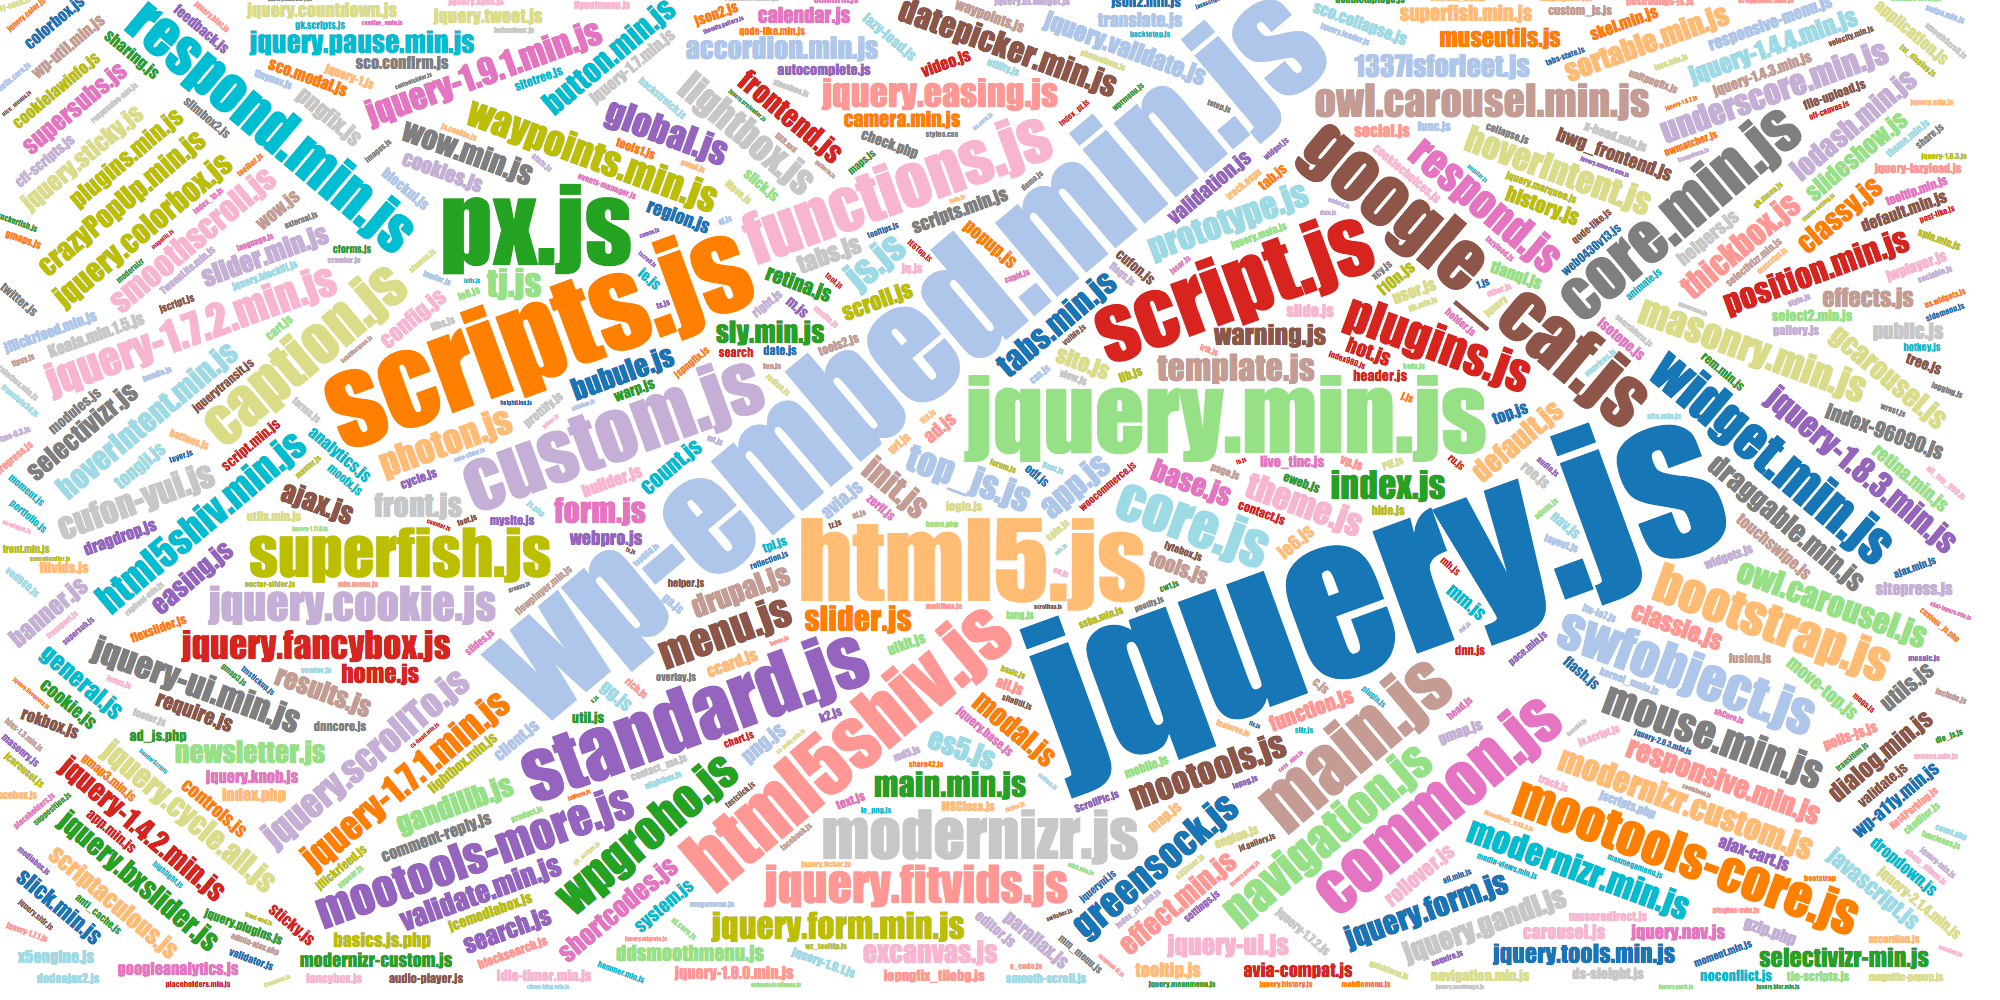 Popular names of JS files underscore.min.js, urchin.js, etc.